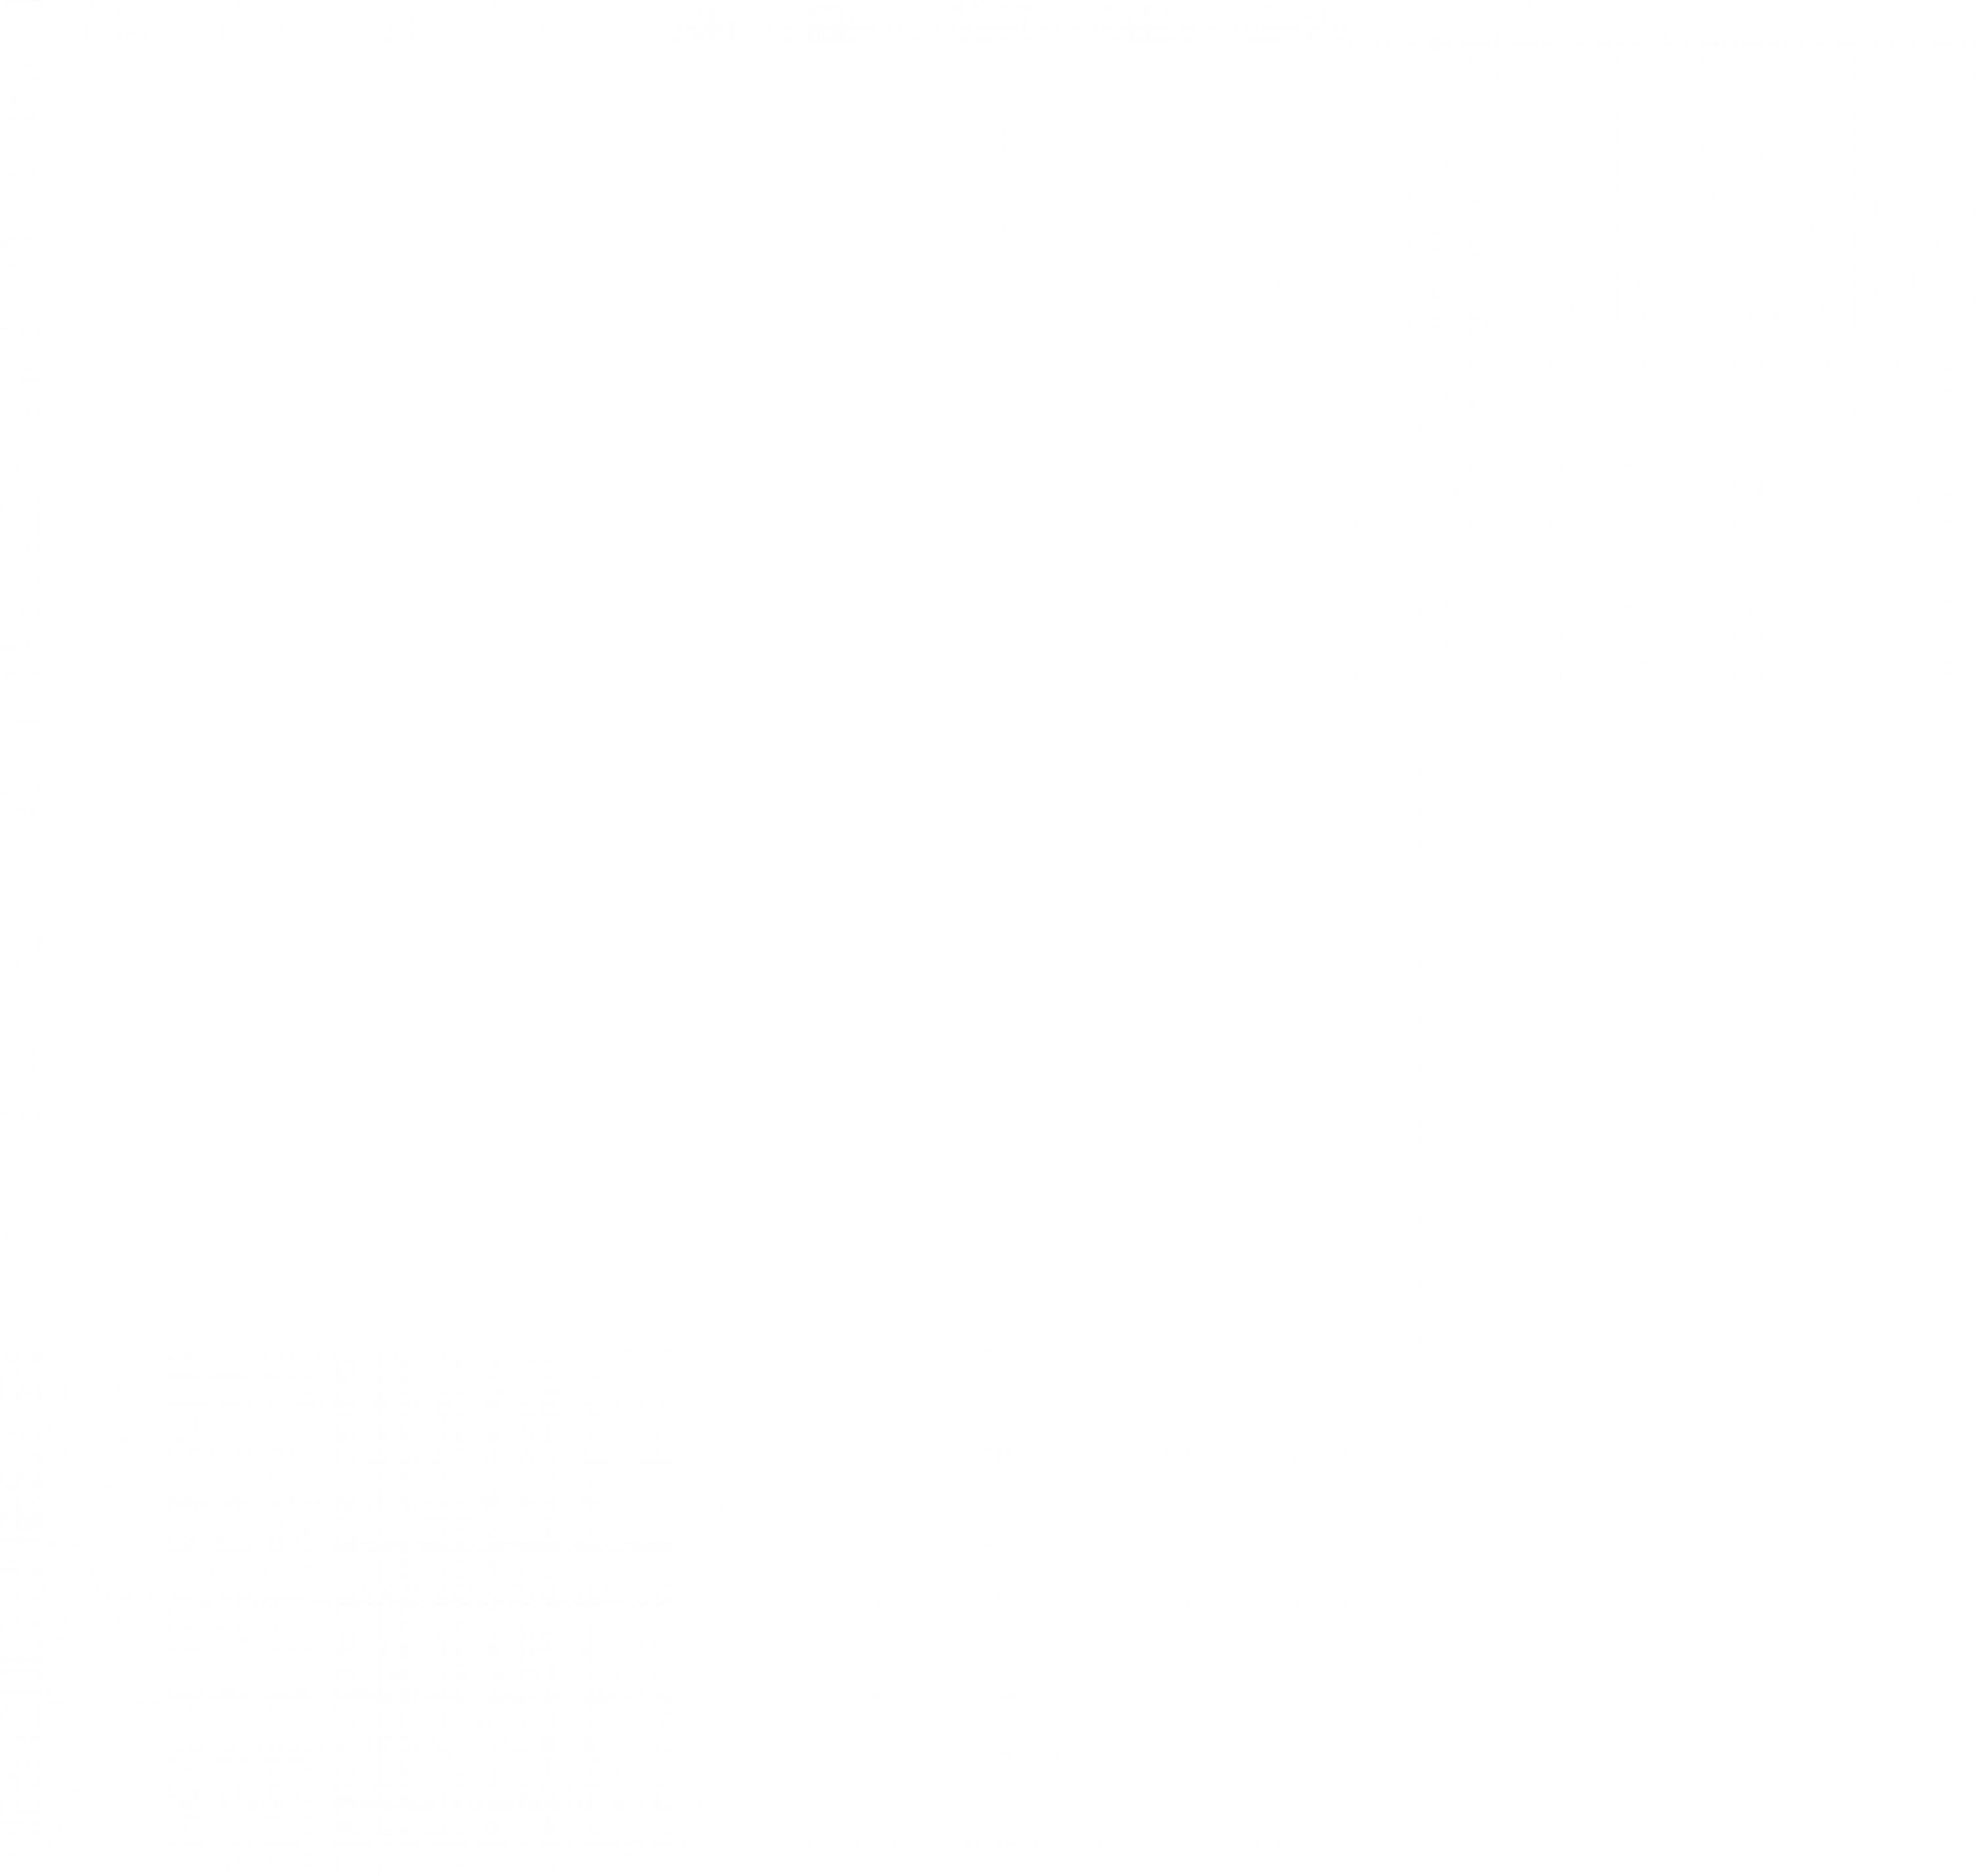 mainedot-logo-portrait-outline